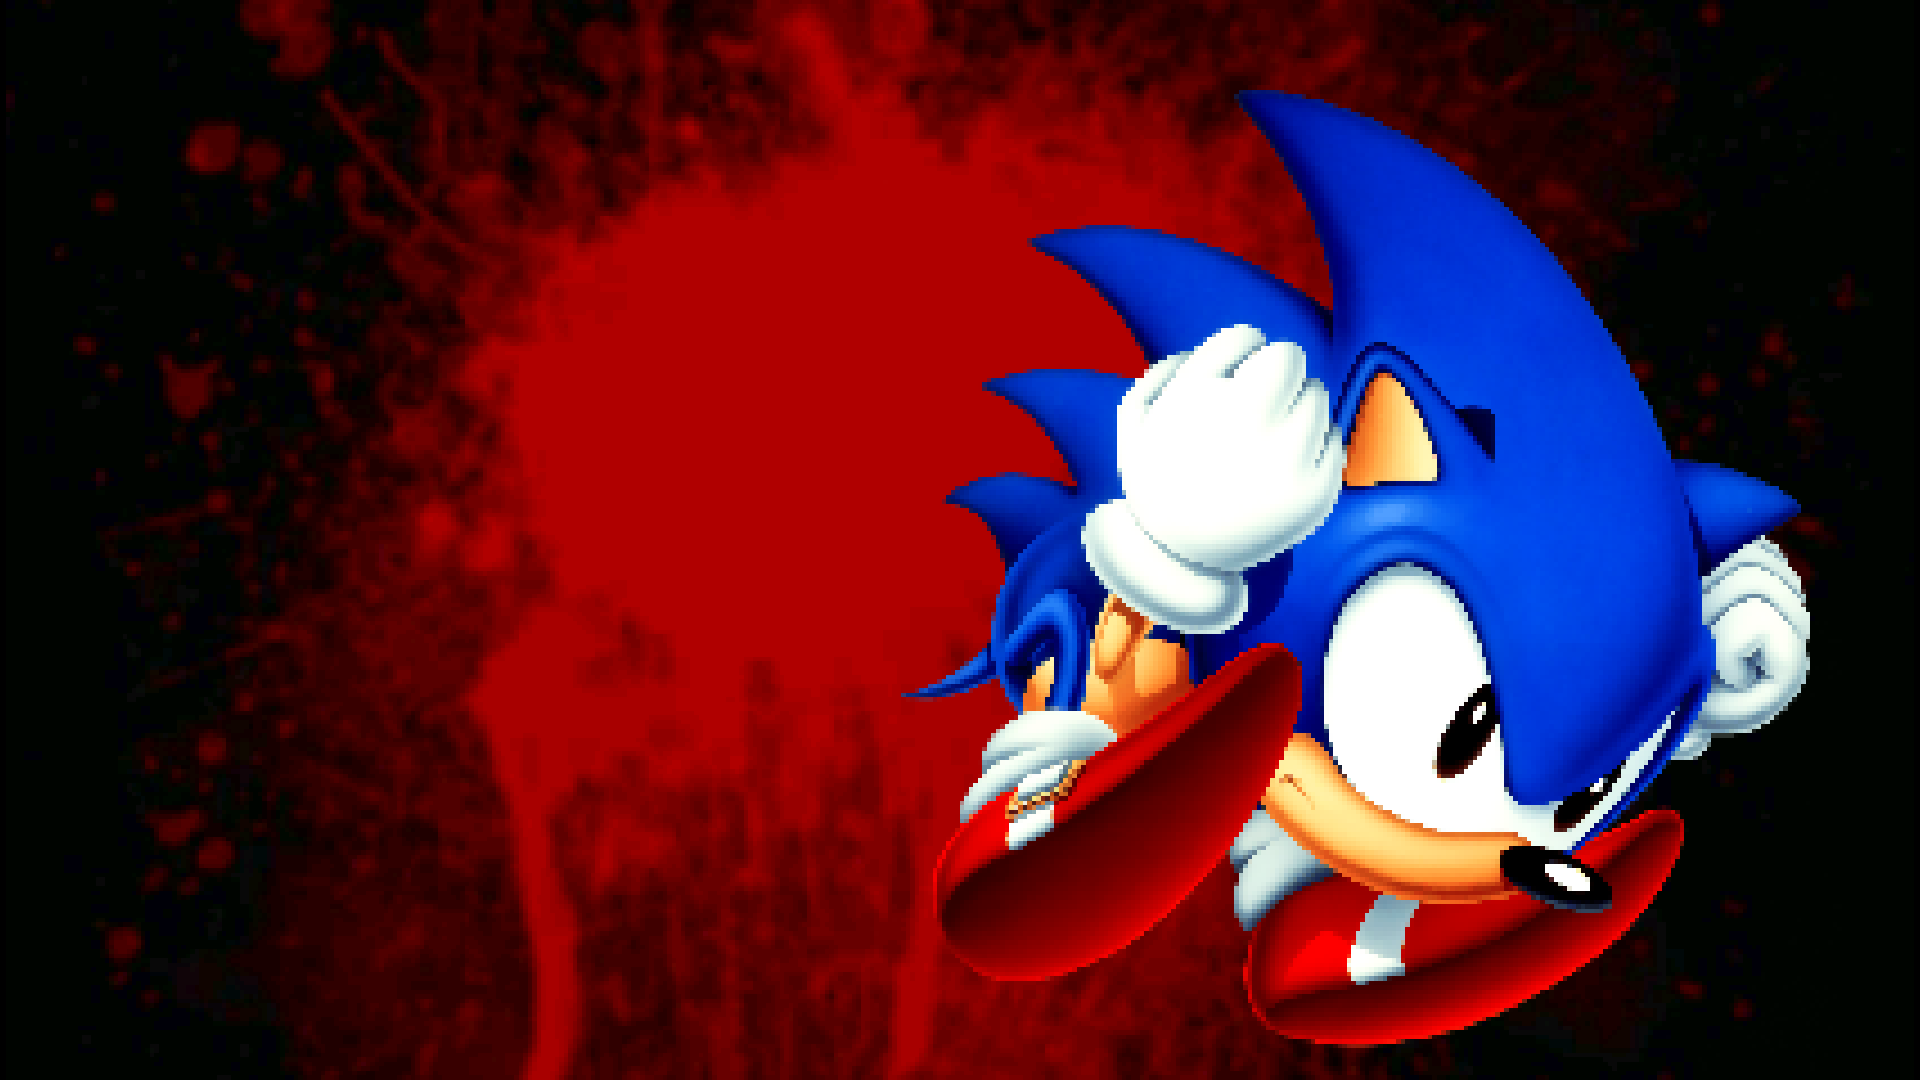 Download Sonic.EXE - MajorGeeks